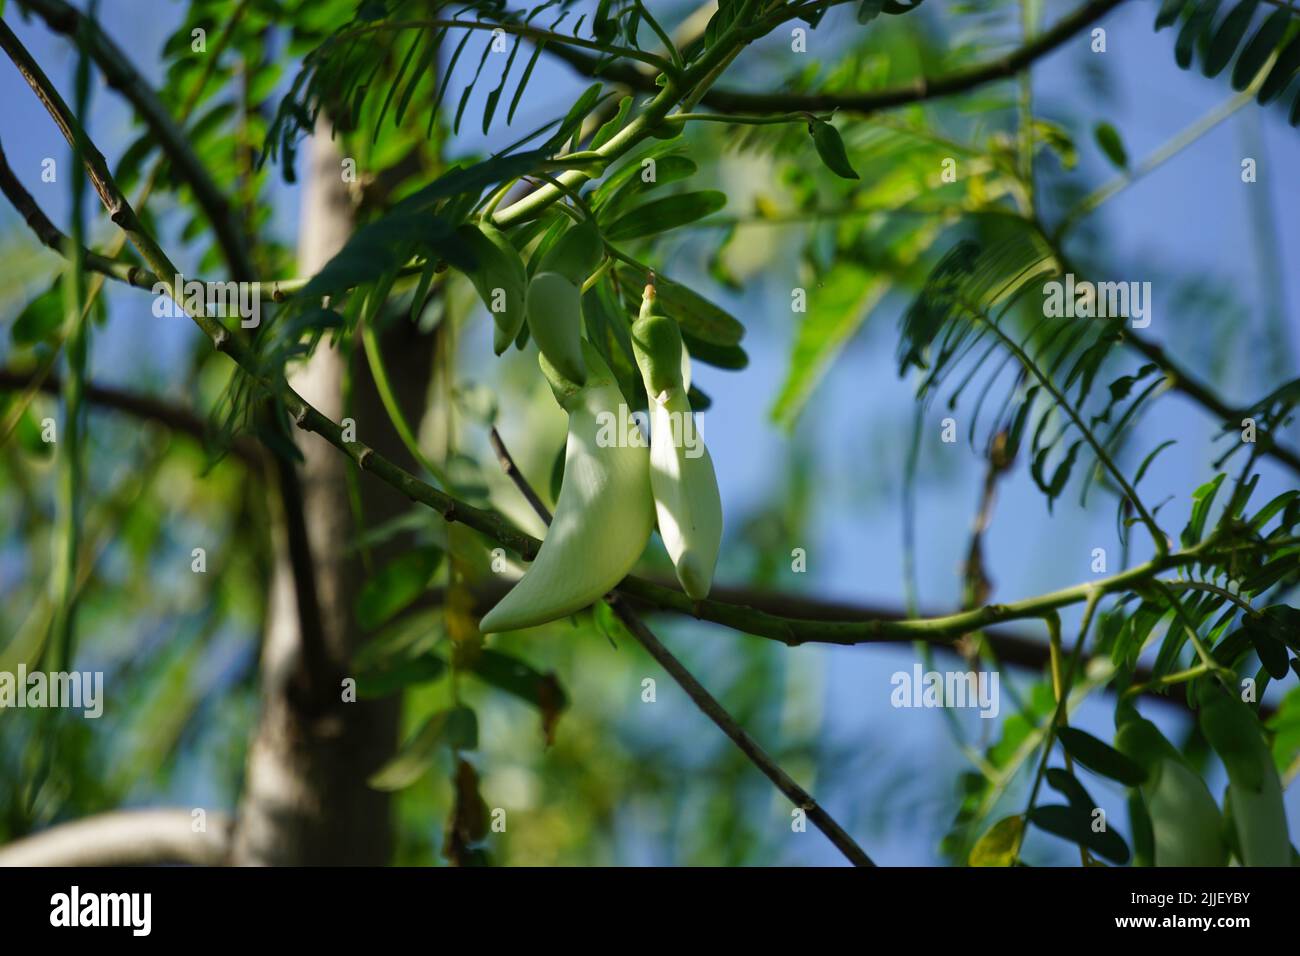 Vegetable hummingbird (Also called Sesbania grandiflora, hummingbird, West Indian pea, Jayanti, agati, katurai) with a natural background Stock Photo